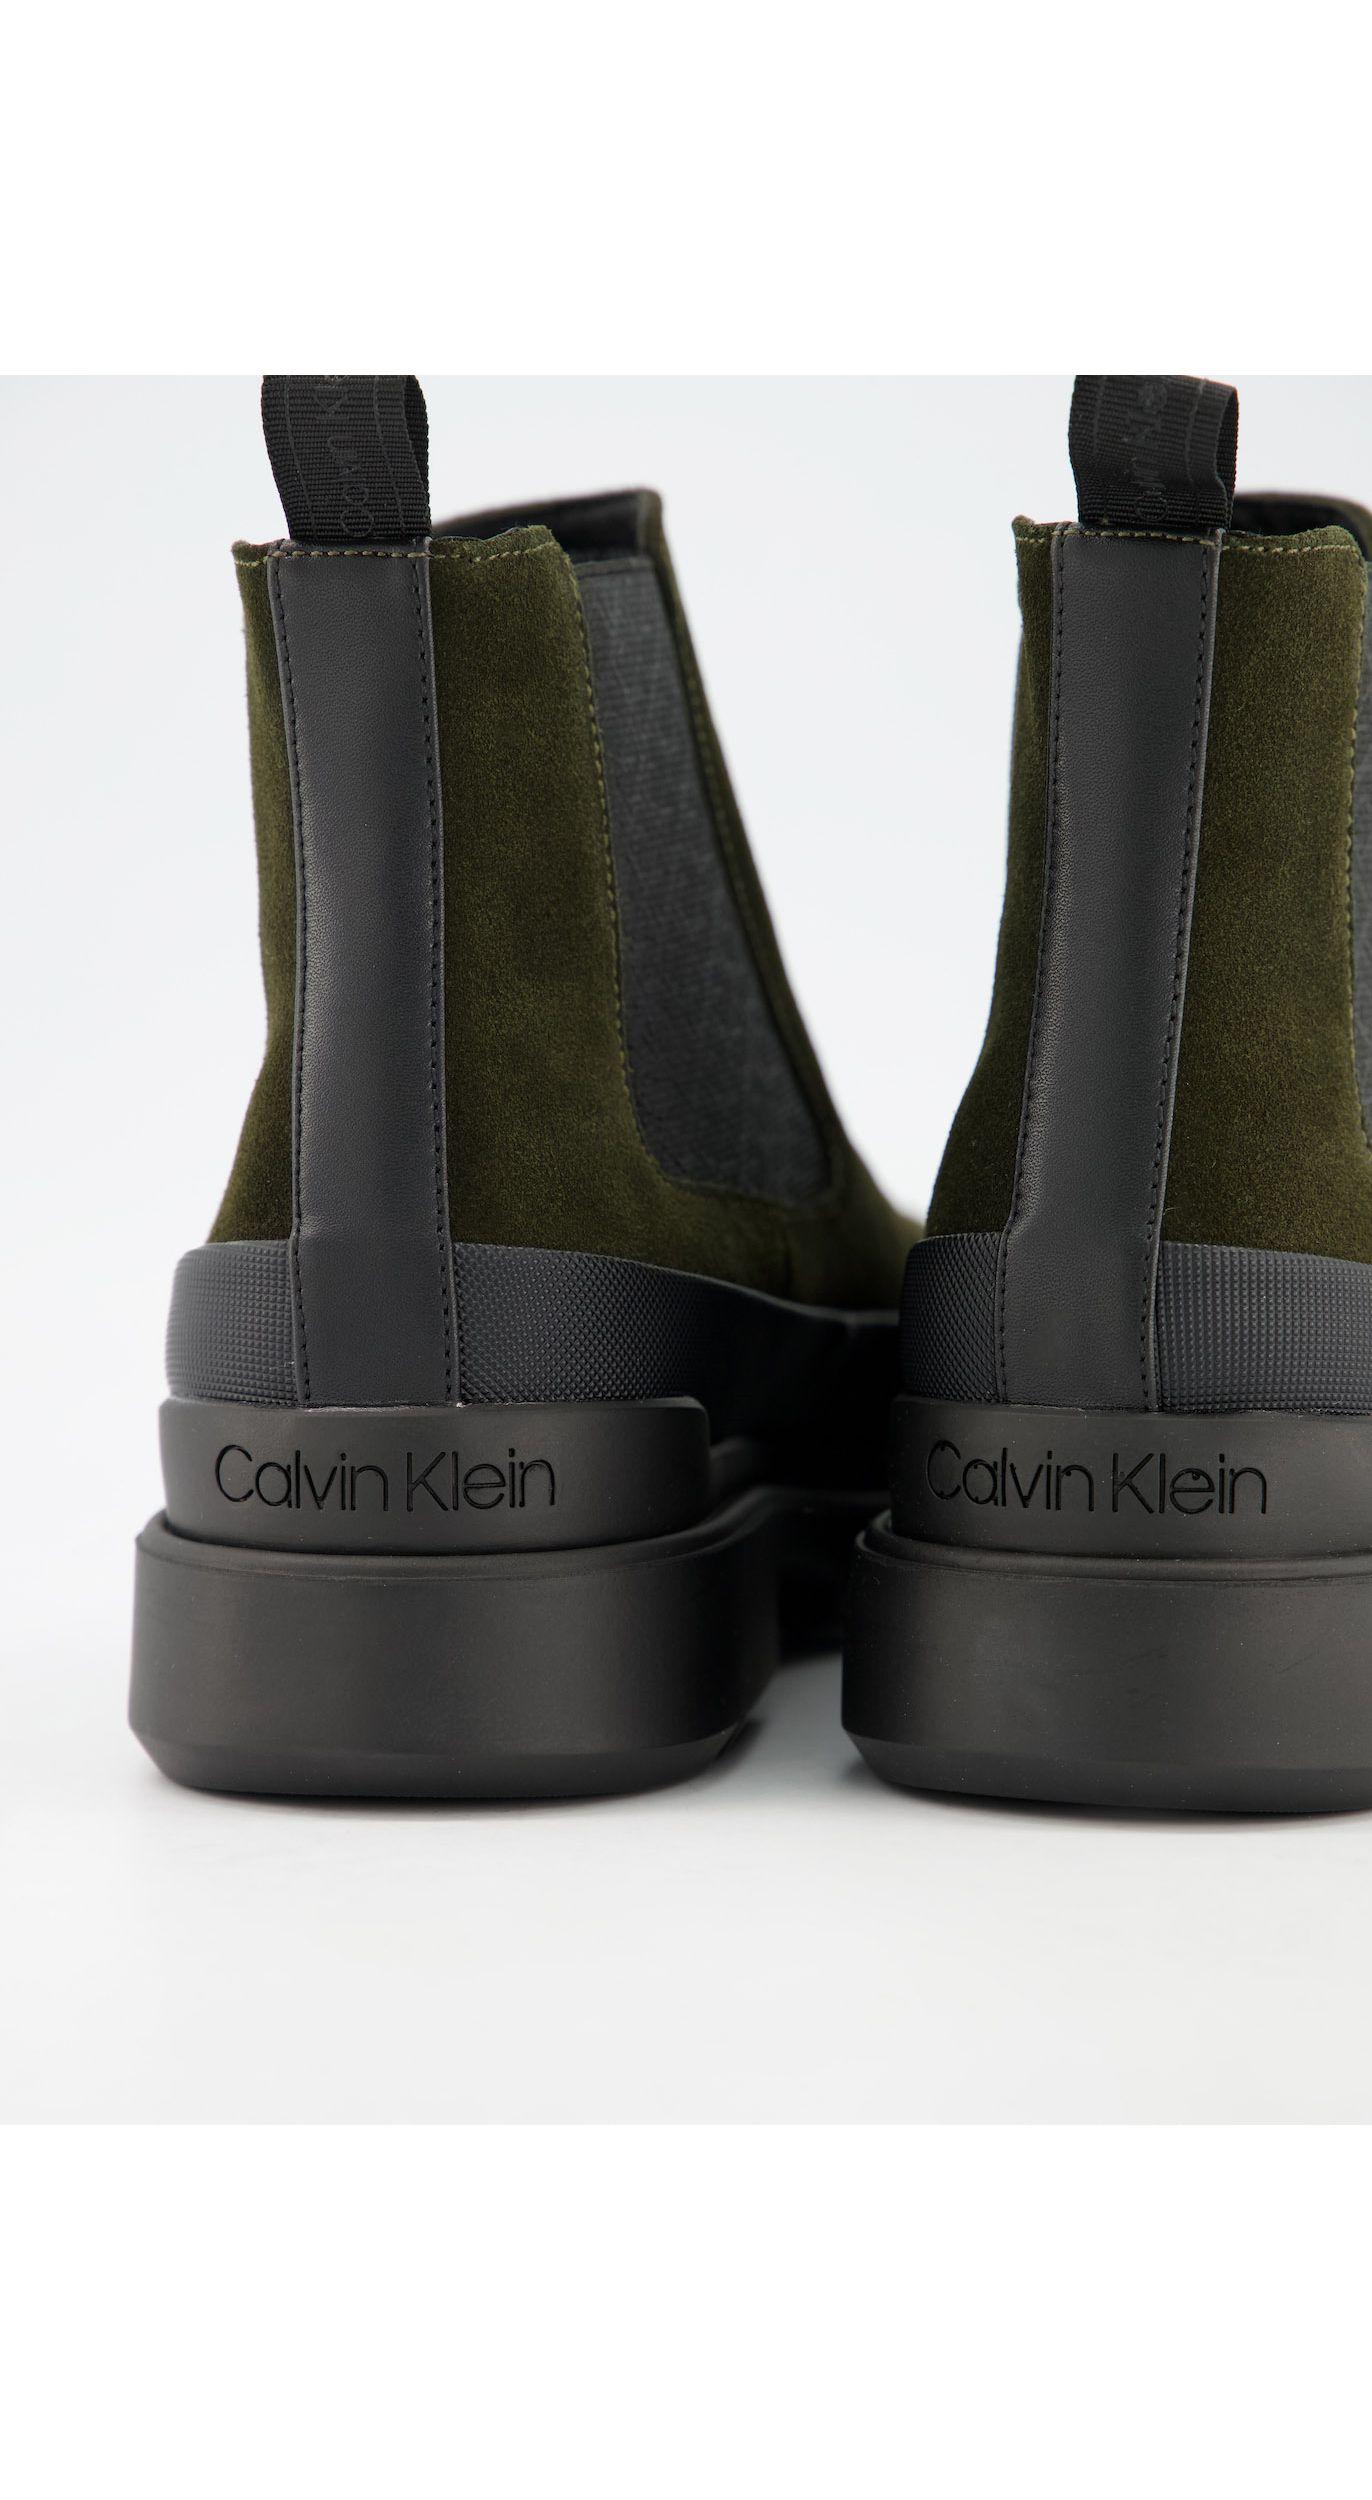 Calvin Klein Shelton Chunky Chelsea Boots in Green for Men - Lyst